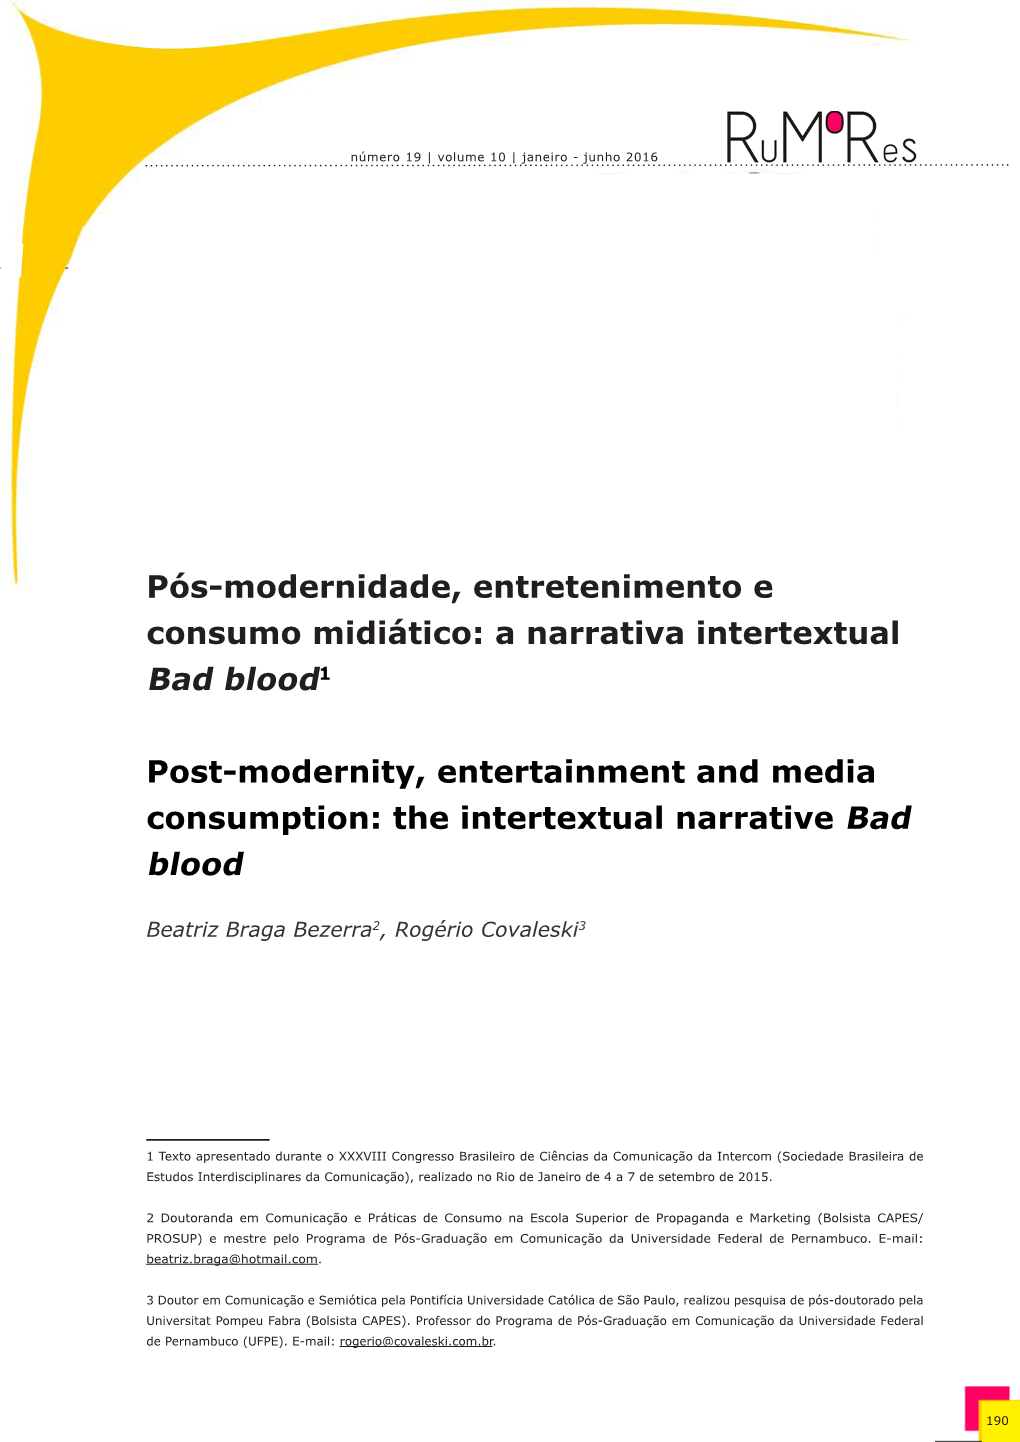 A Narrativa Intertextual Bad Blood1 Post-Modernity, Entertainment And